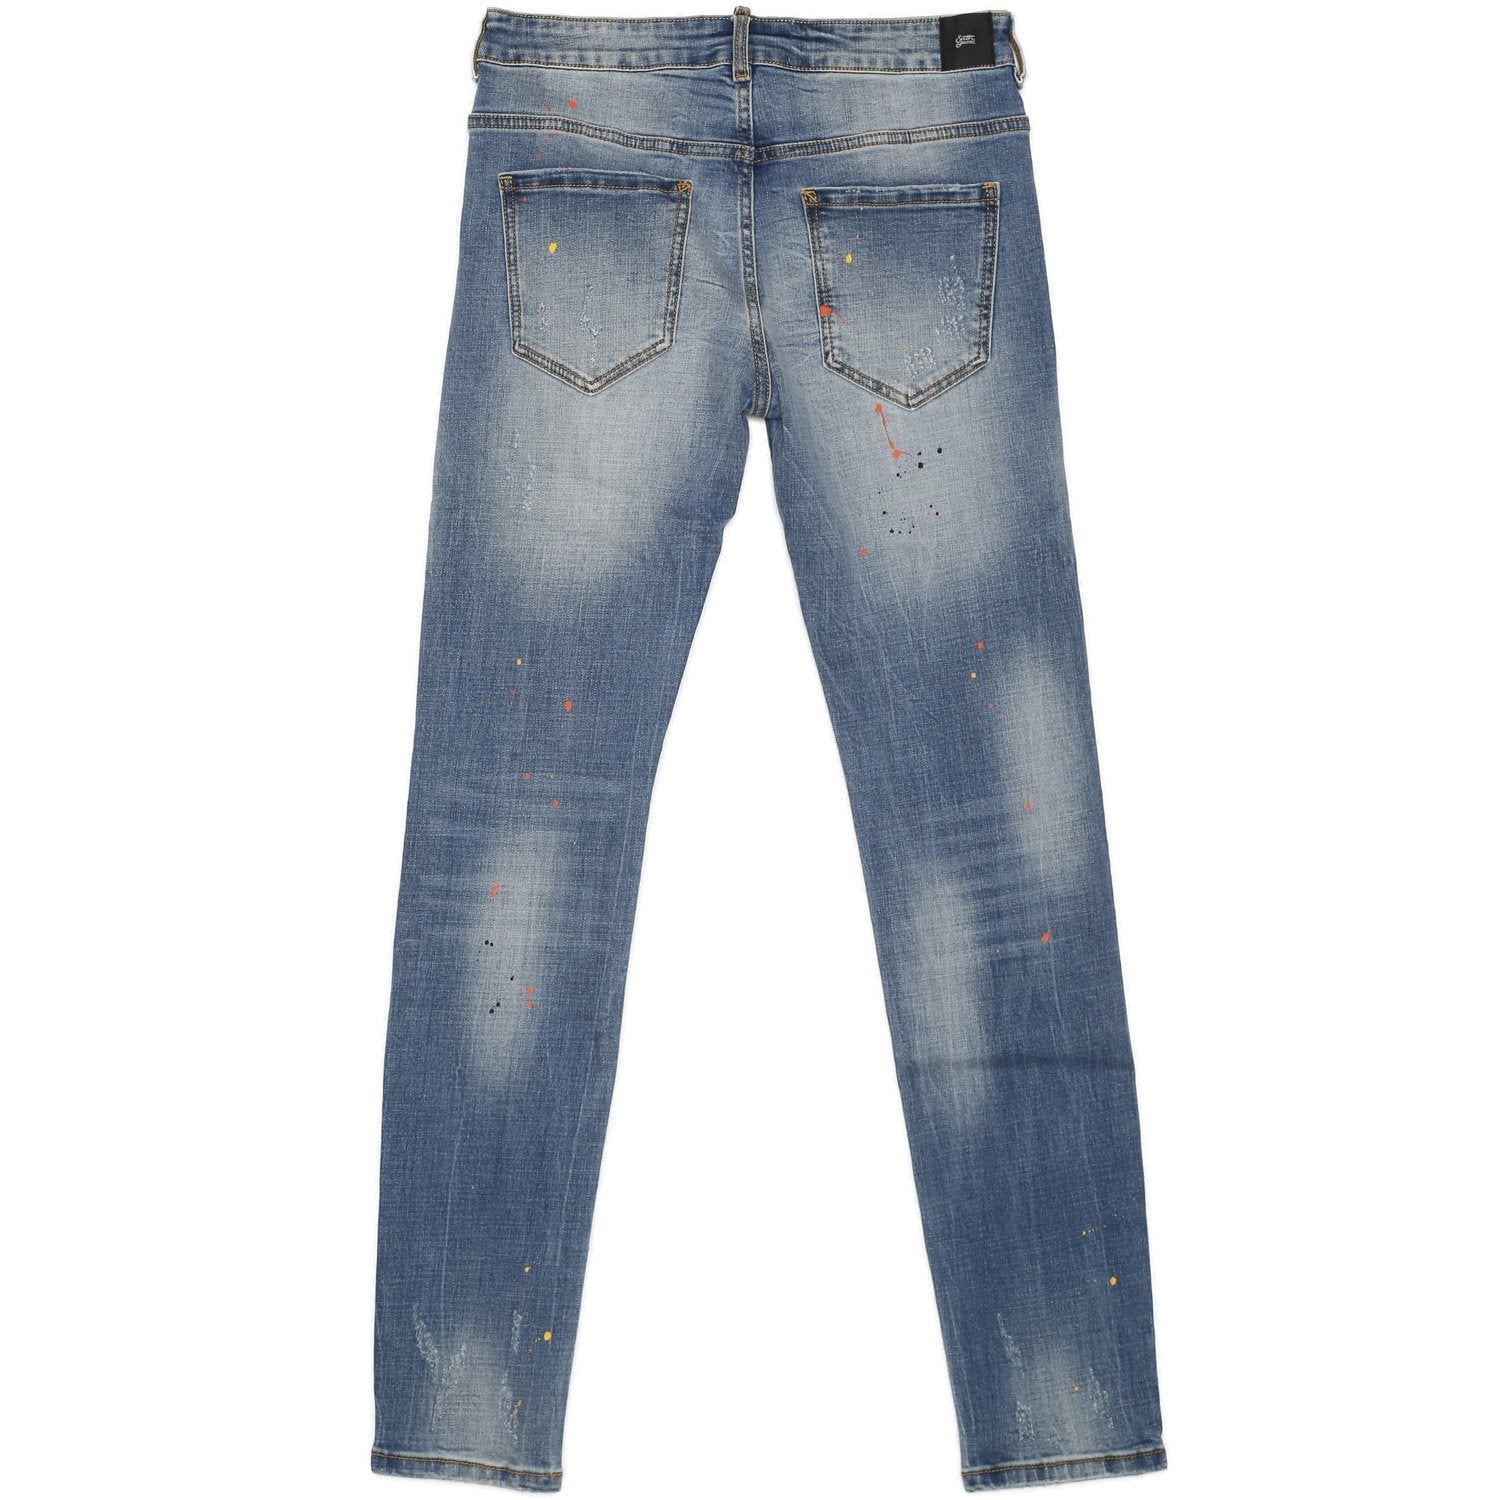 Multicolored pocket jeans blue